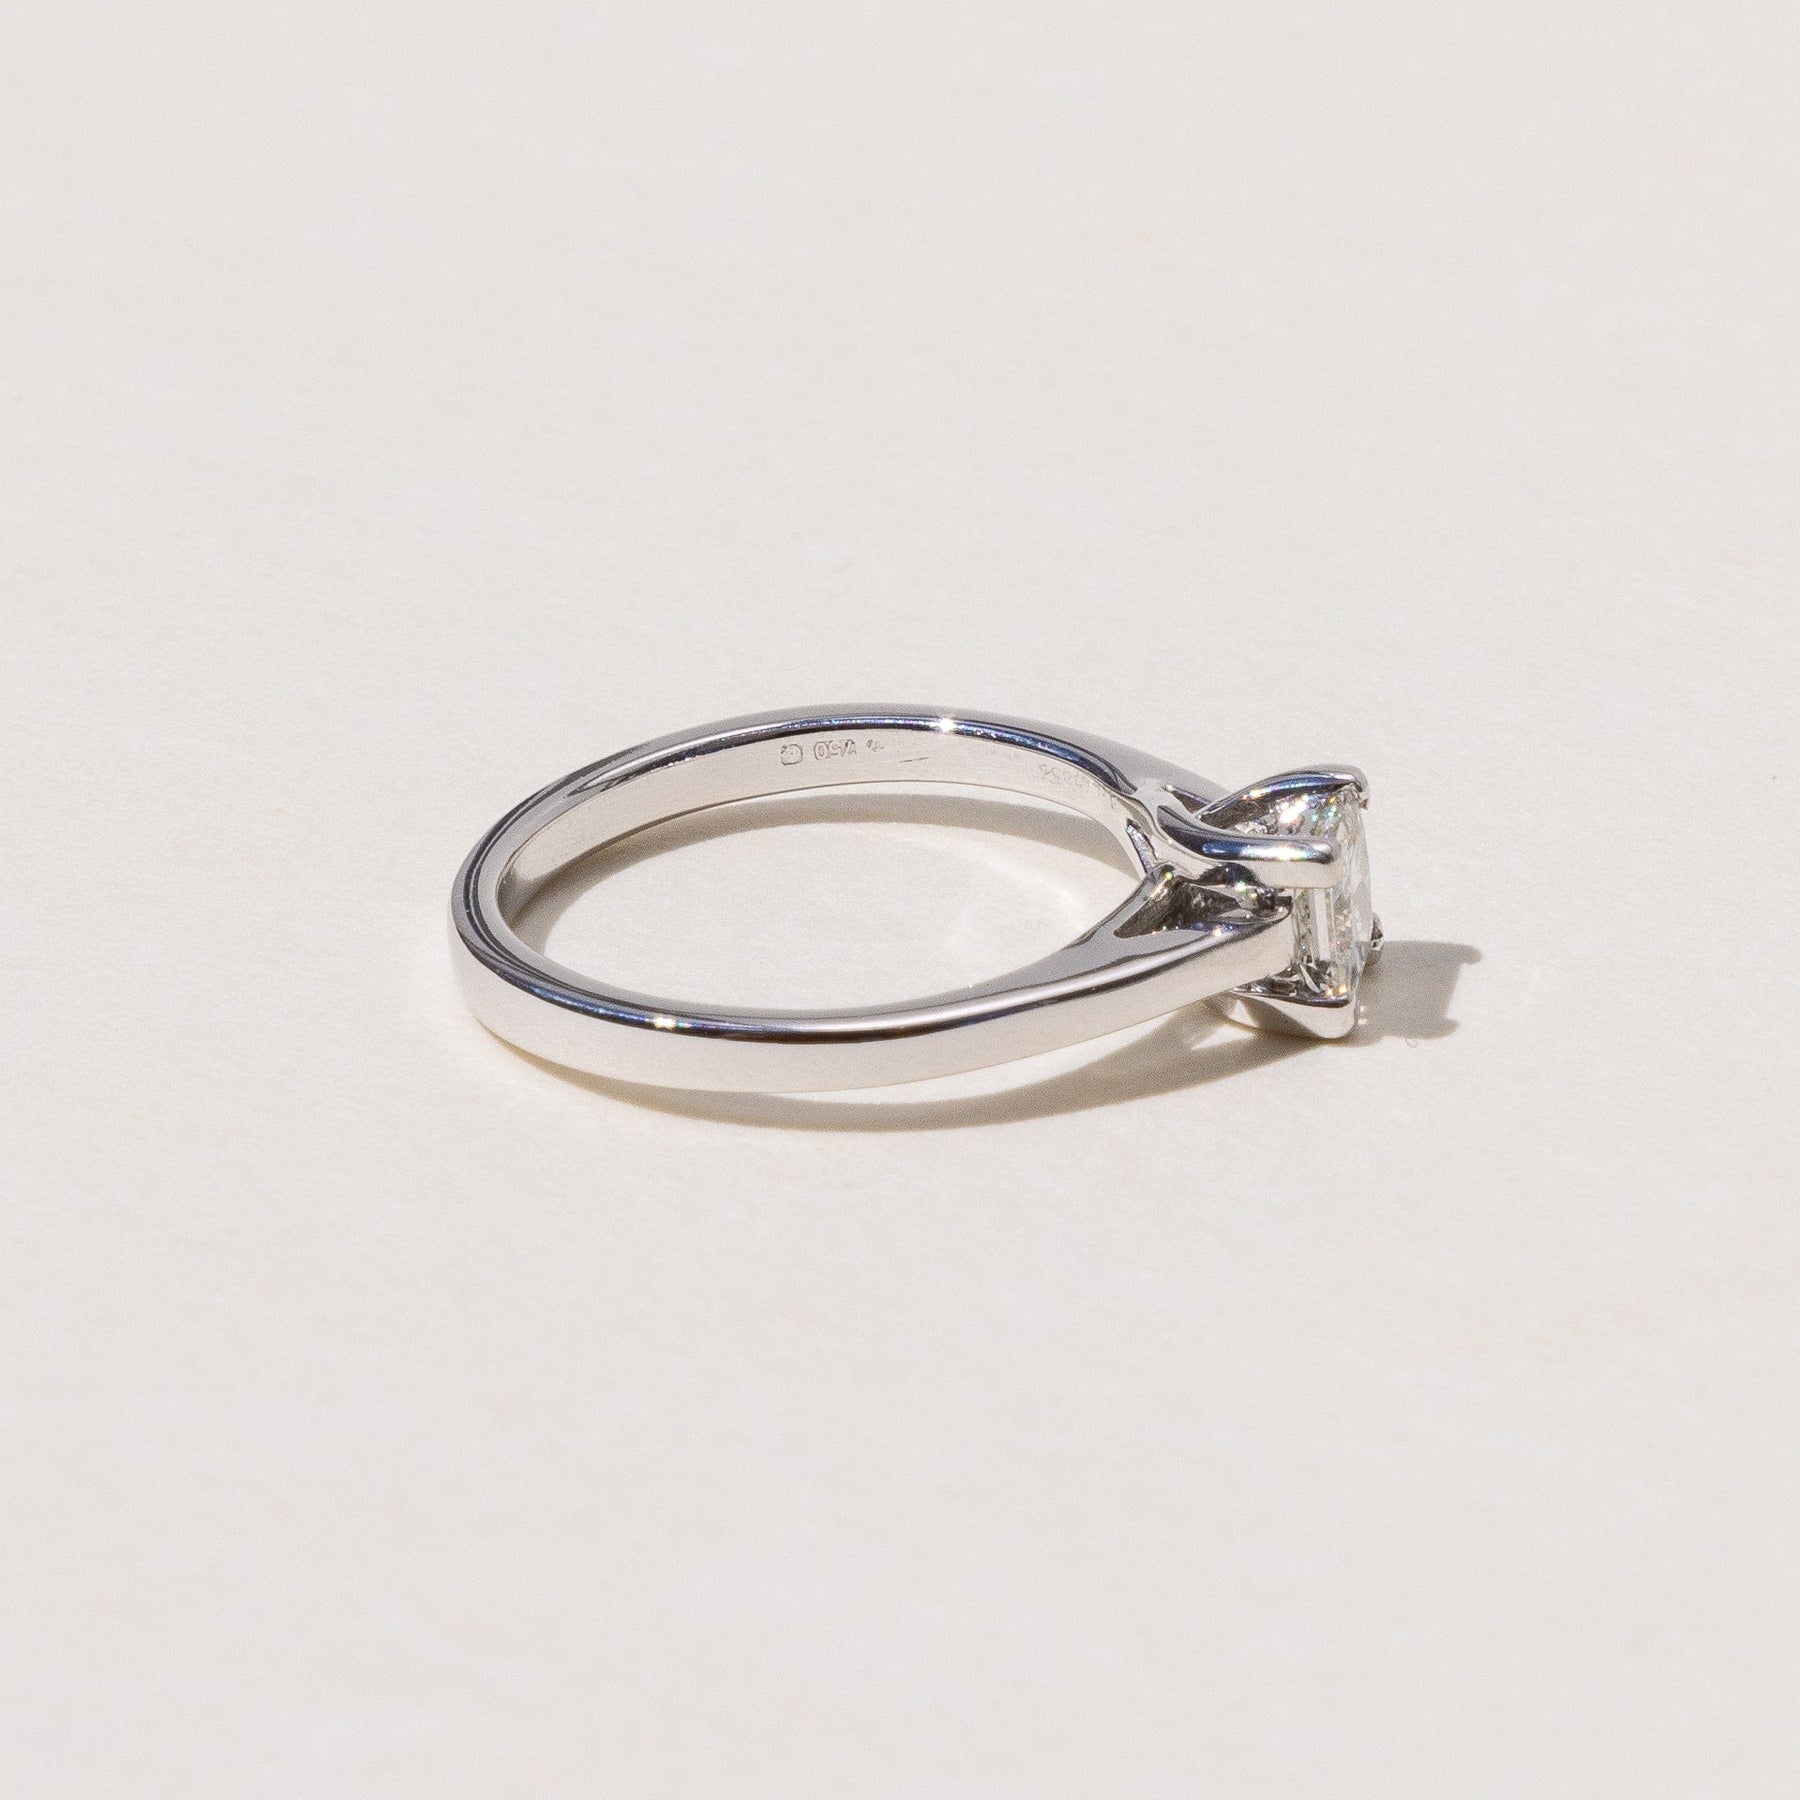 Handmade Lab Grown Diamond Engagement Ring